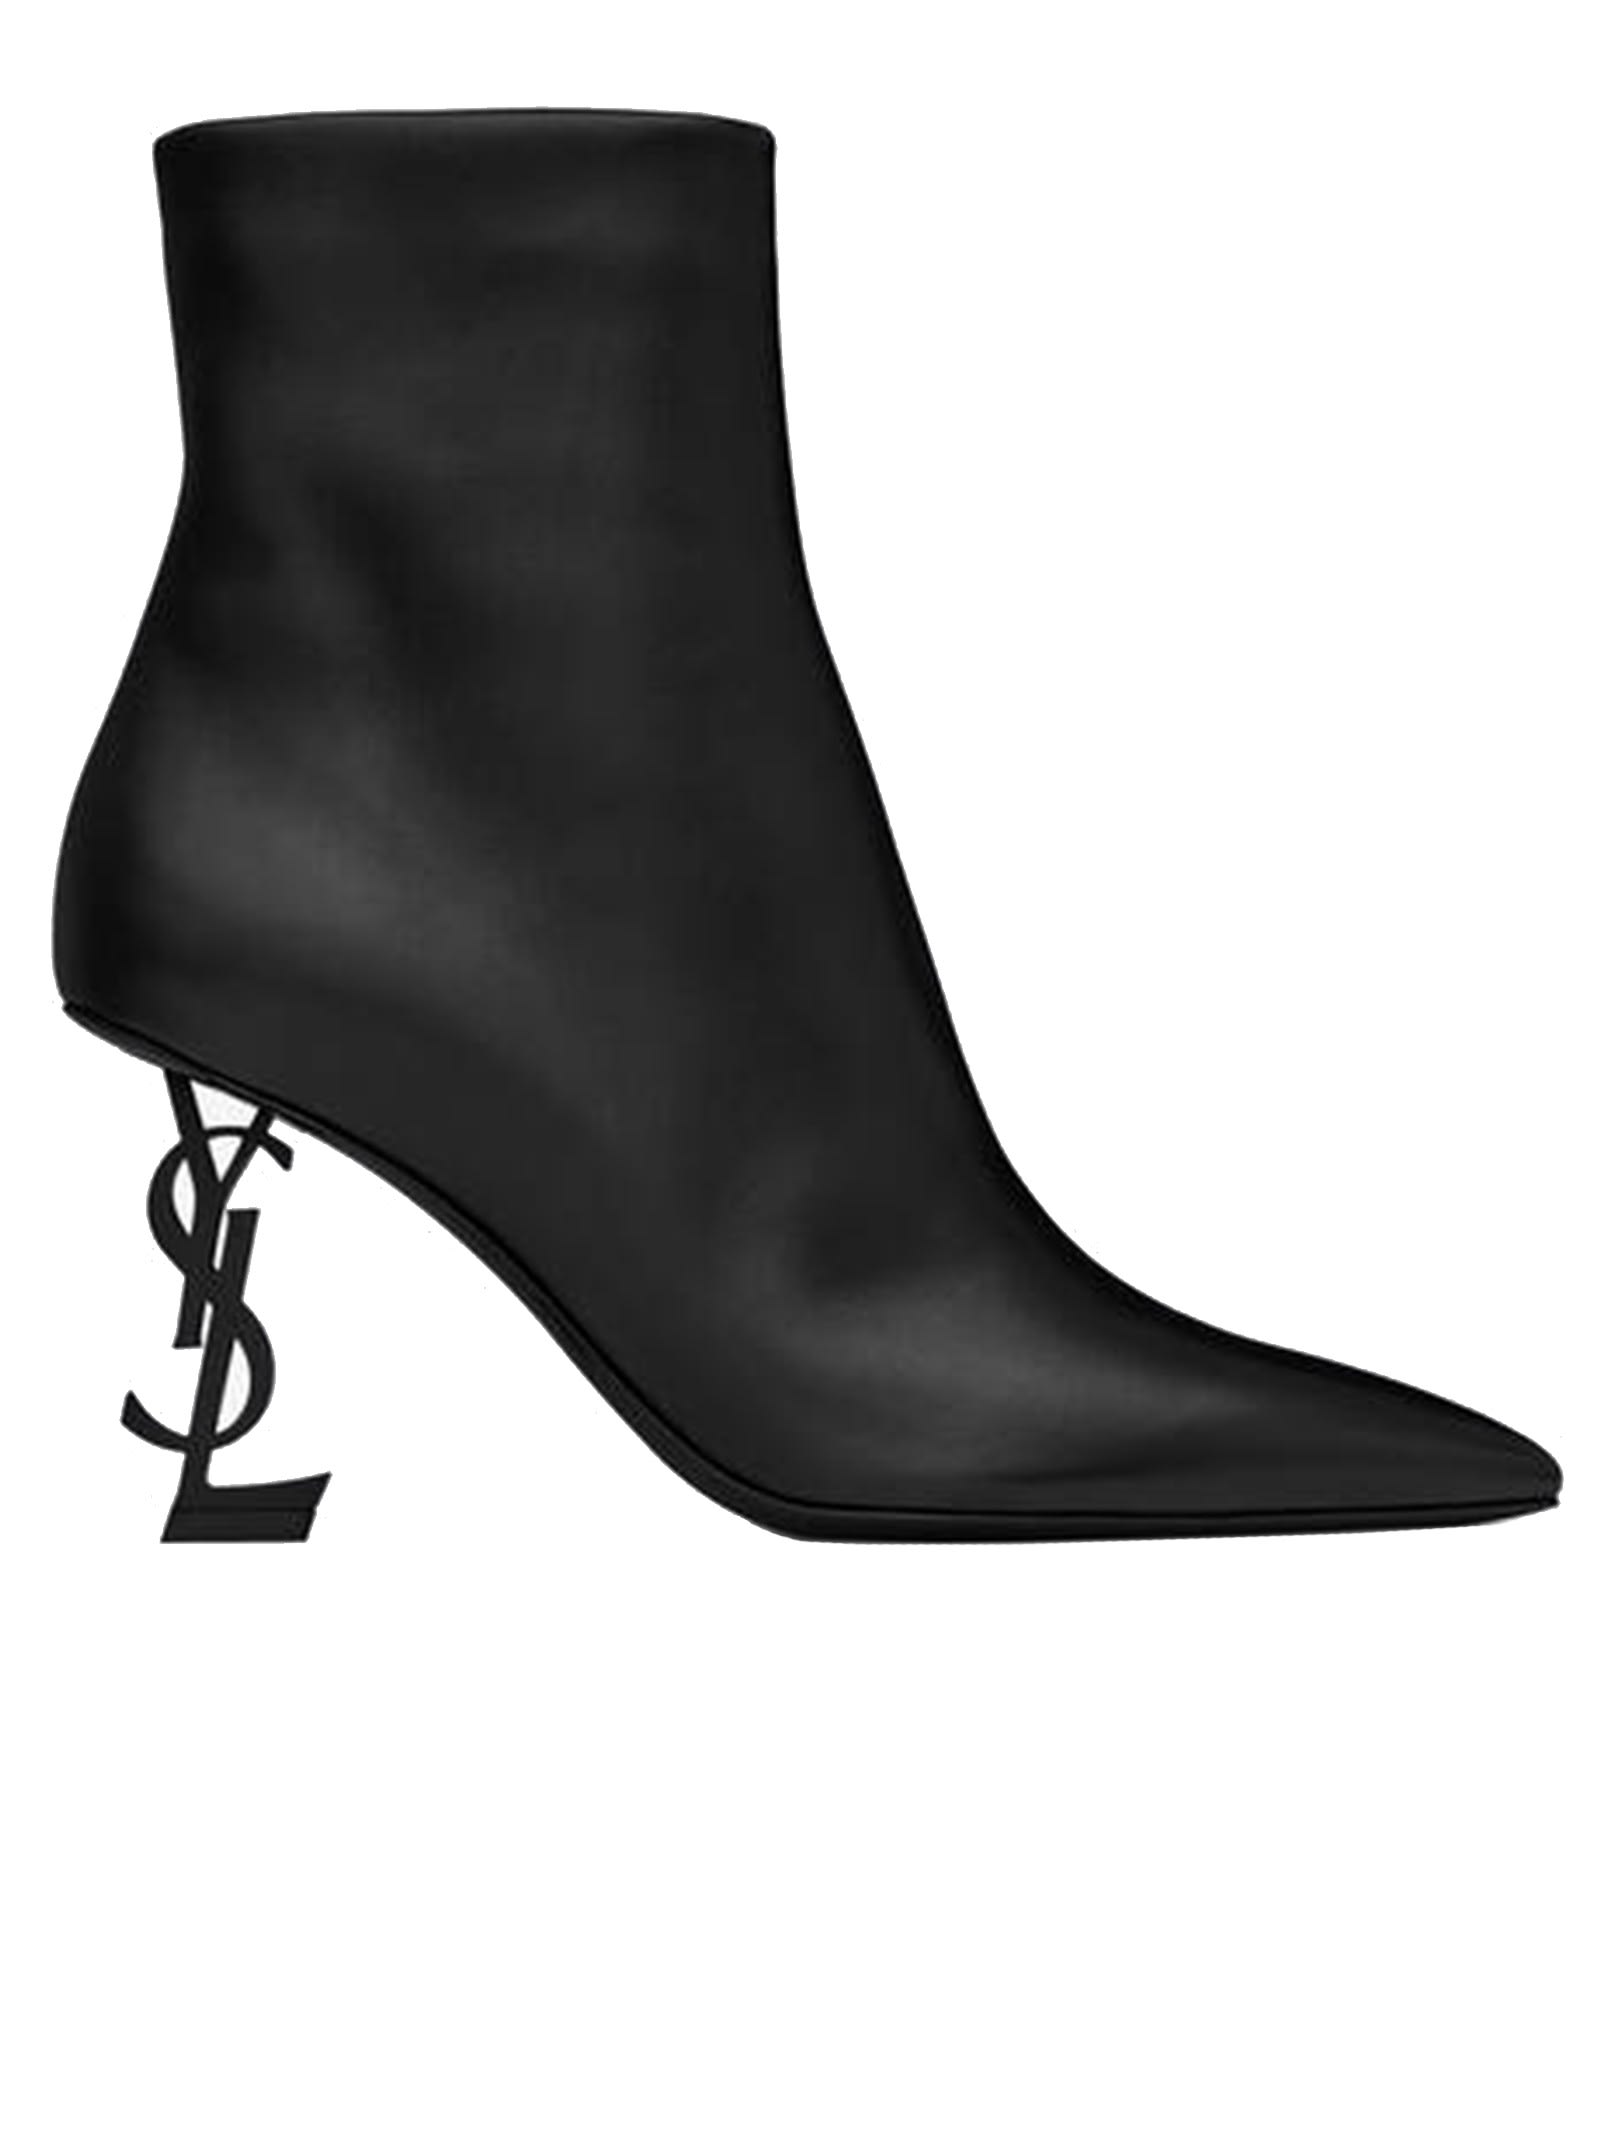 Buy Saint Laurent Black Leather Opyum 85 Ankle Boots online, shop Saint Laurent shoes with free shipping